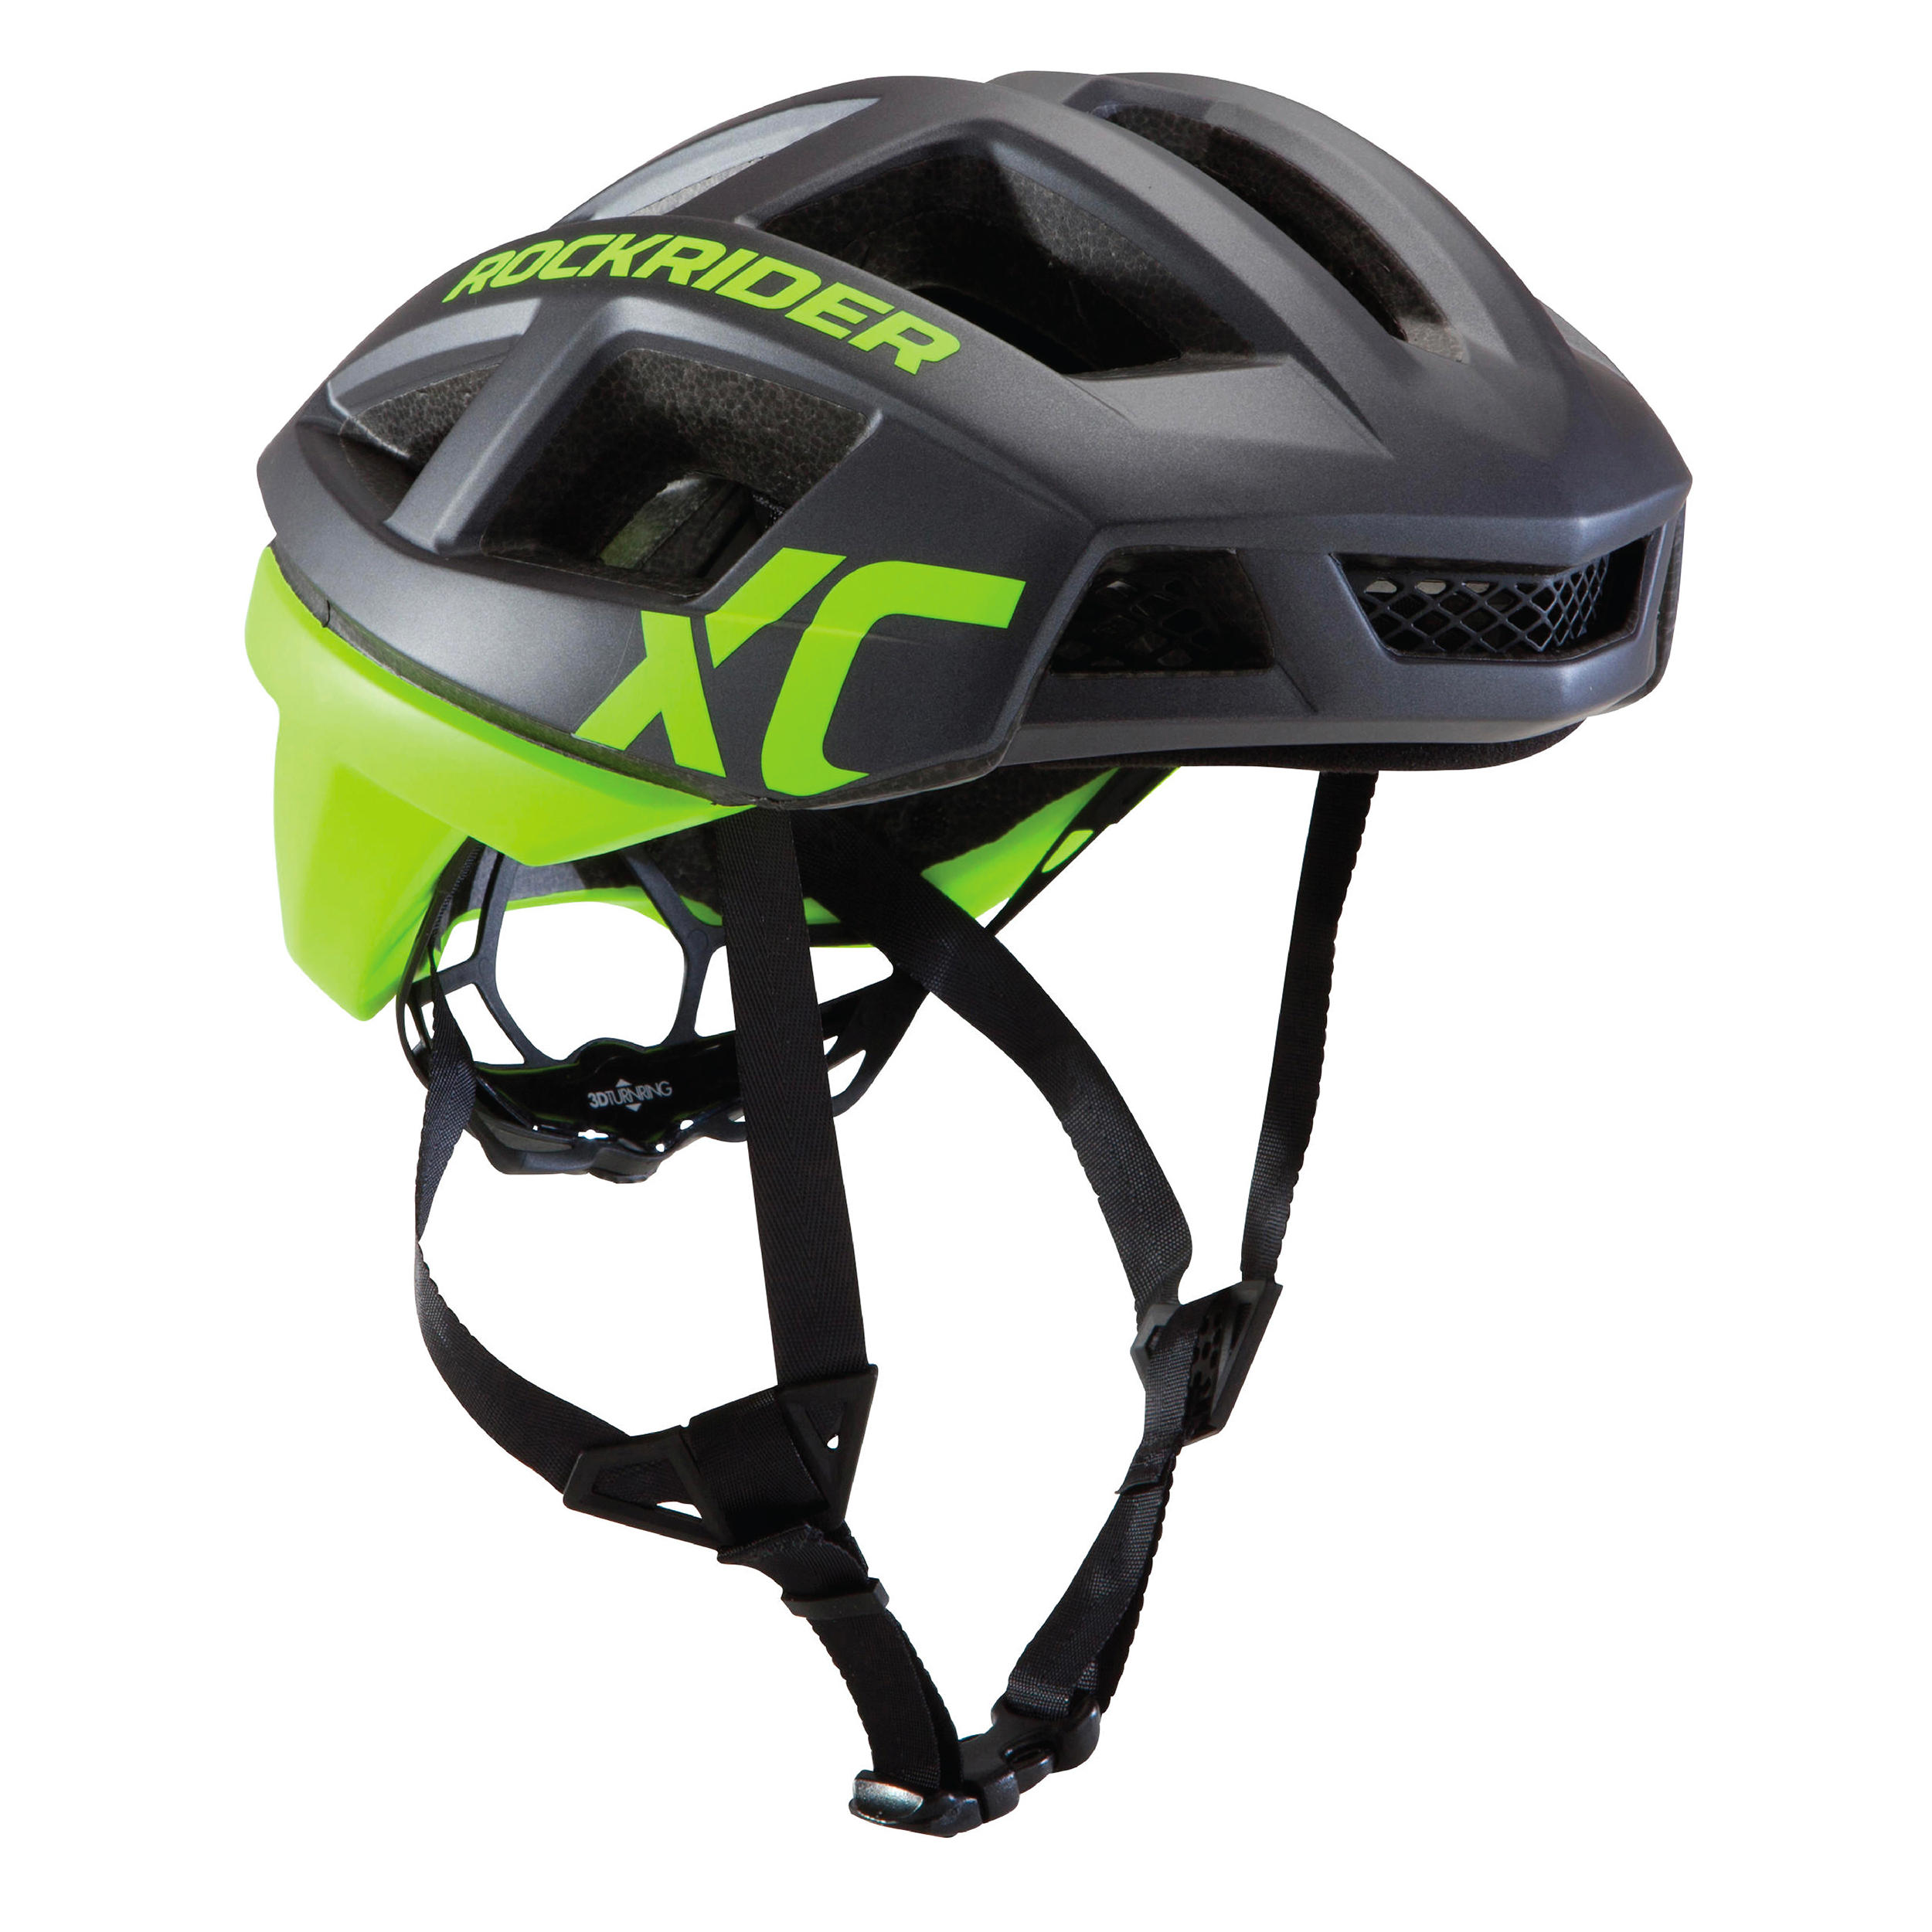 ROCKRIDER Mountain Bike Helmet Race XC - Neon Yellow